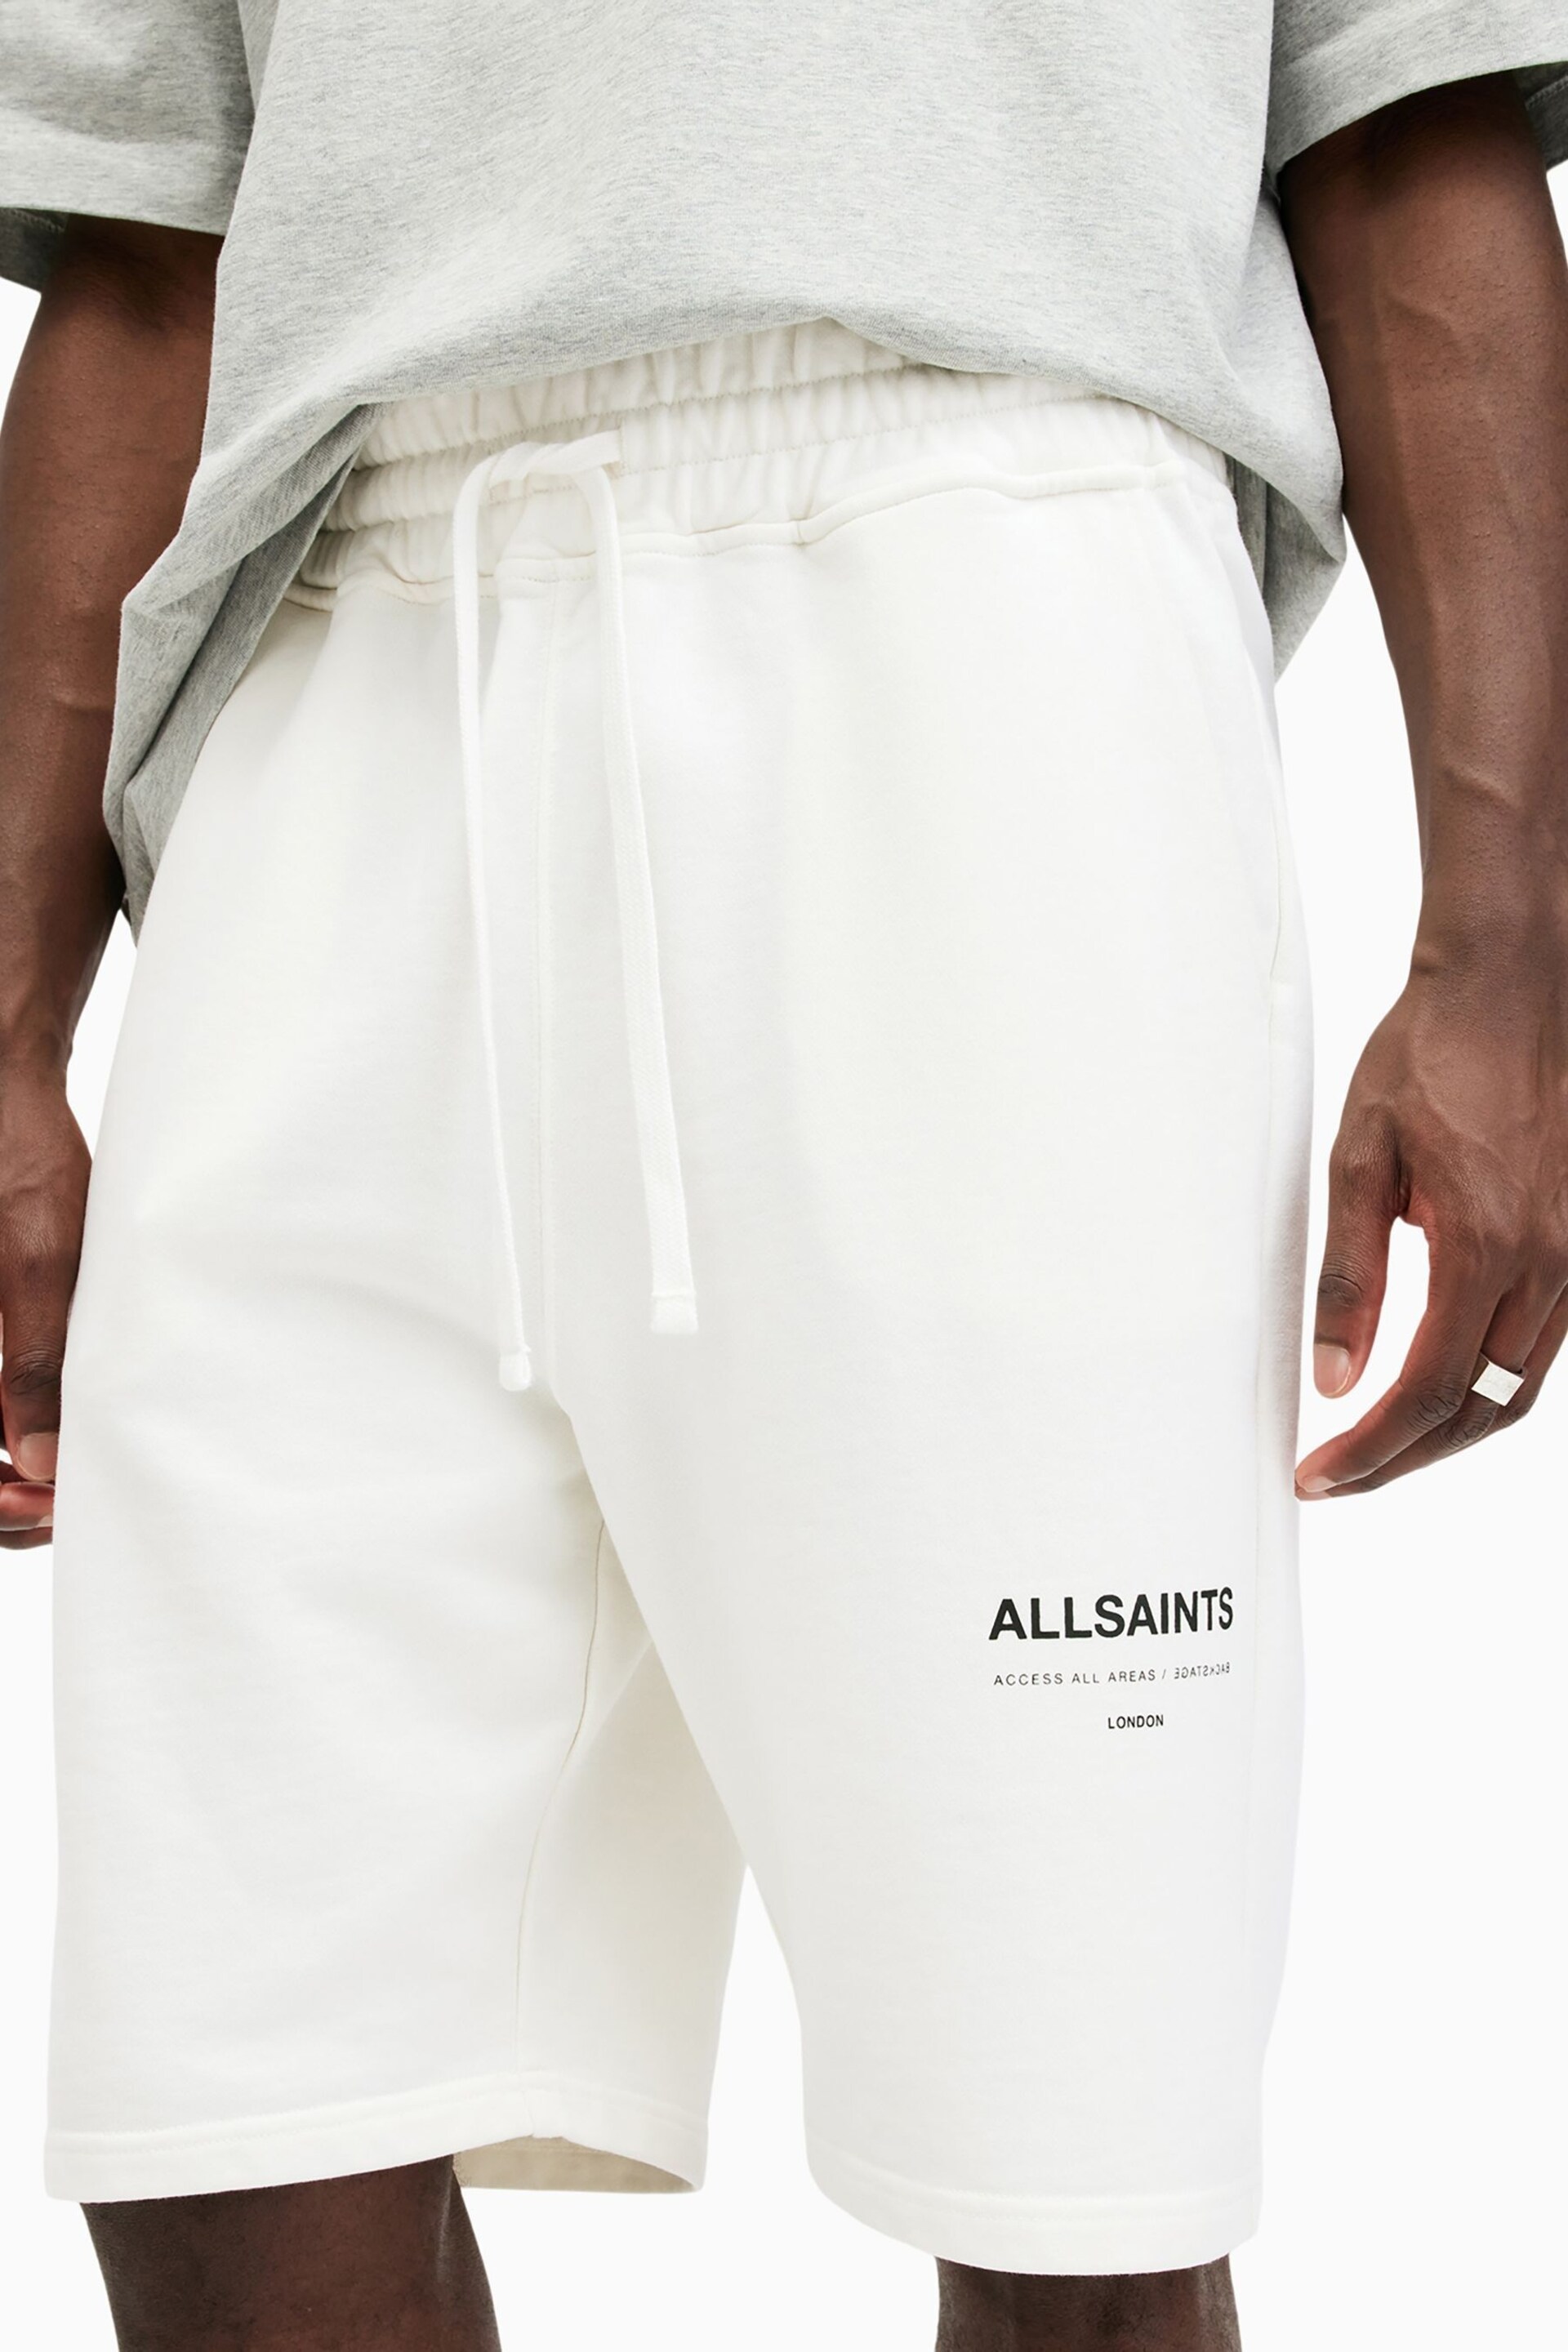 AllSaints White Underground Sweat Short - Image 4 of 7